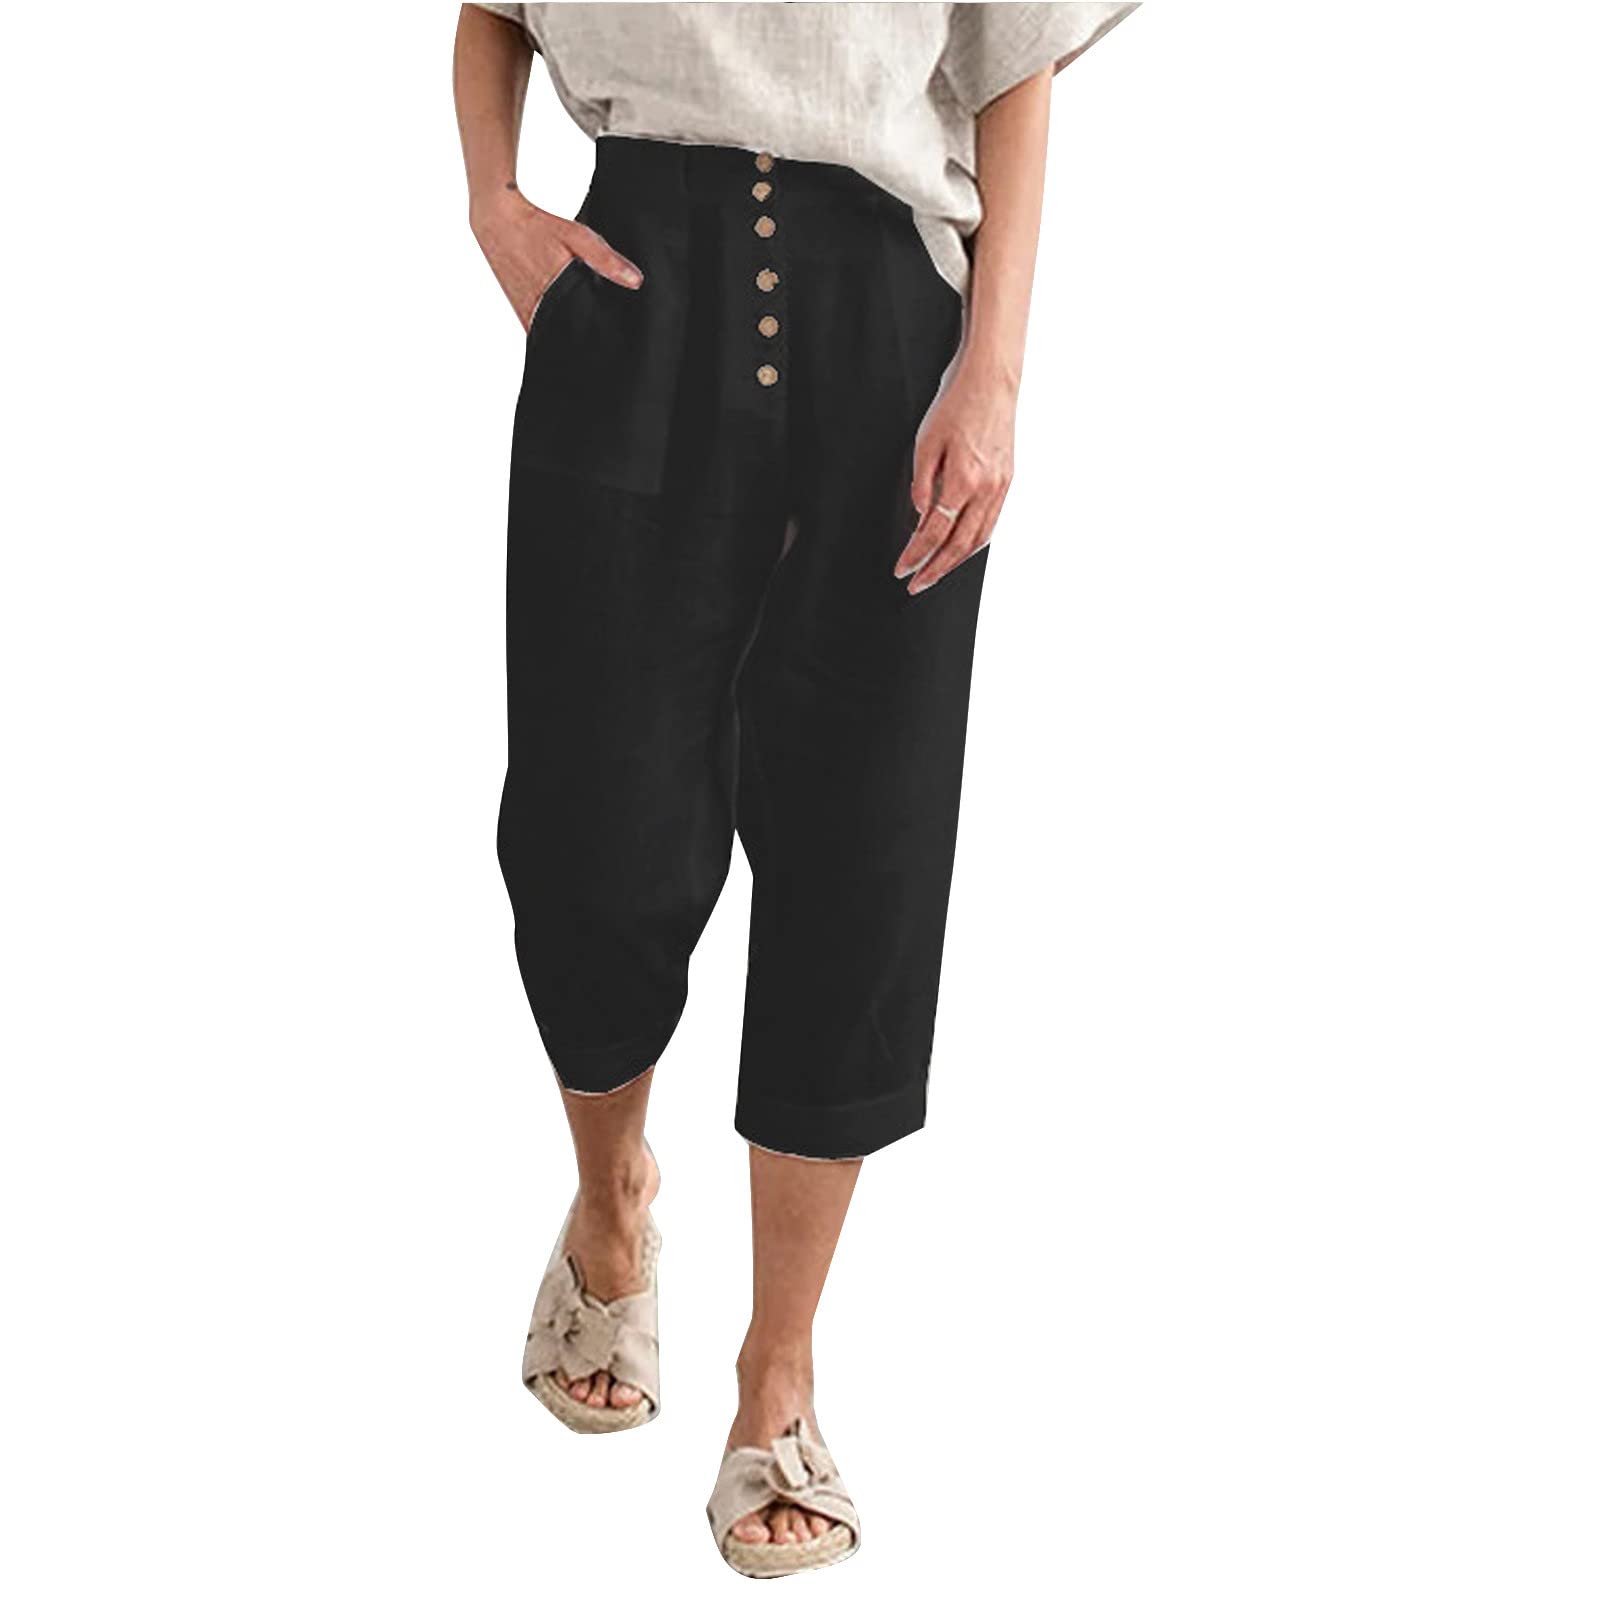 Gufesf Women's Cotton Linen Palazzo Pants Summer Wide Leg Long